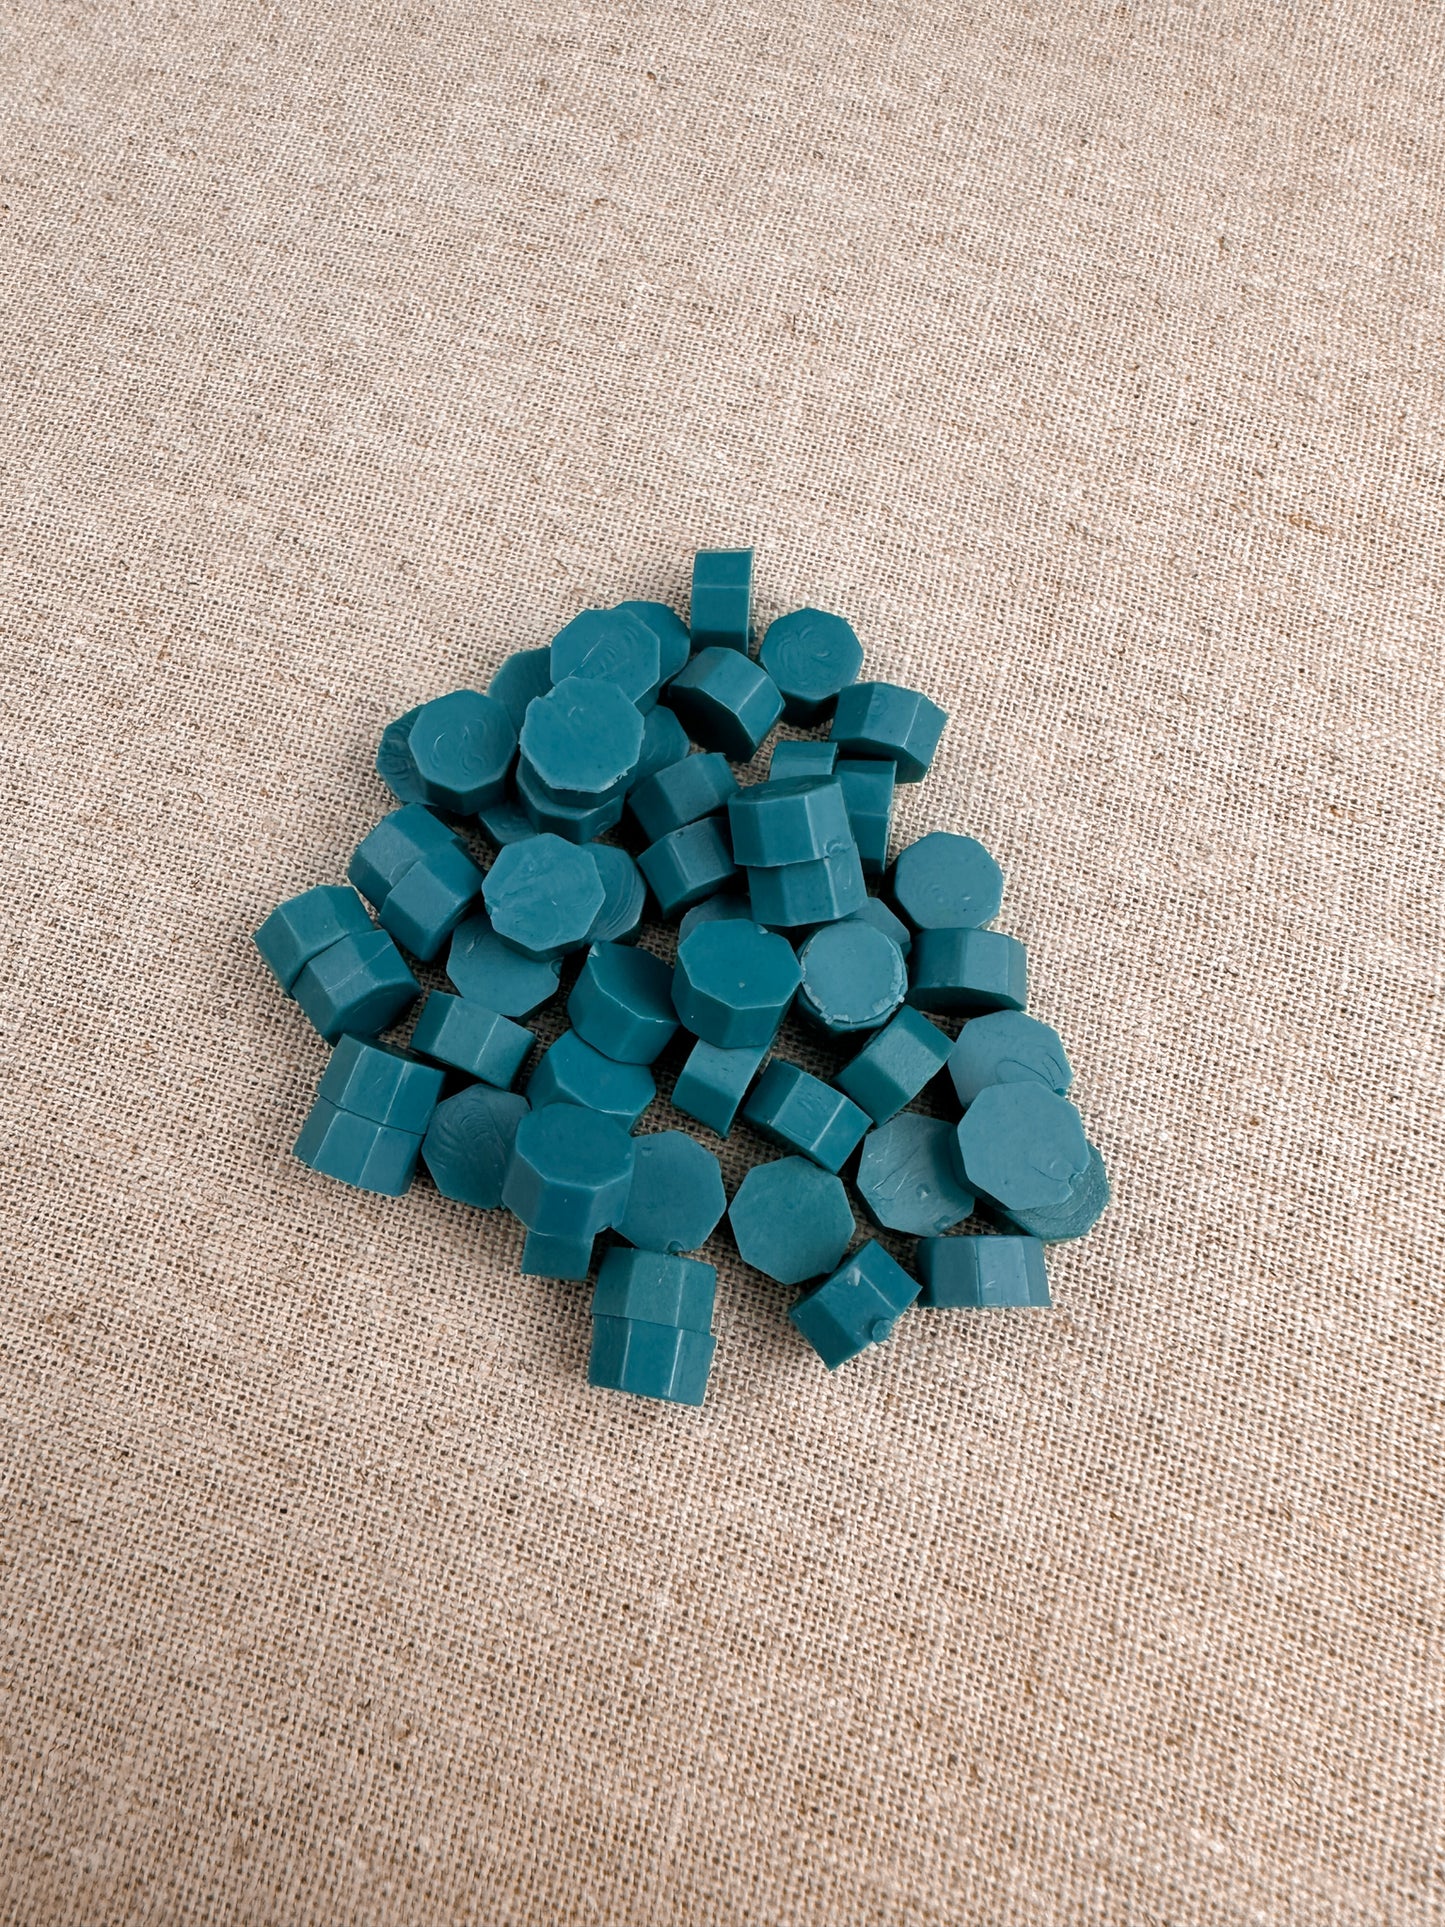 Turquoise Sealing Wax Beads